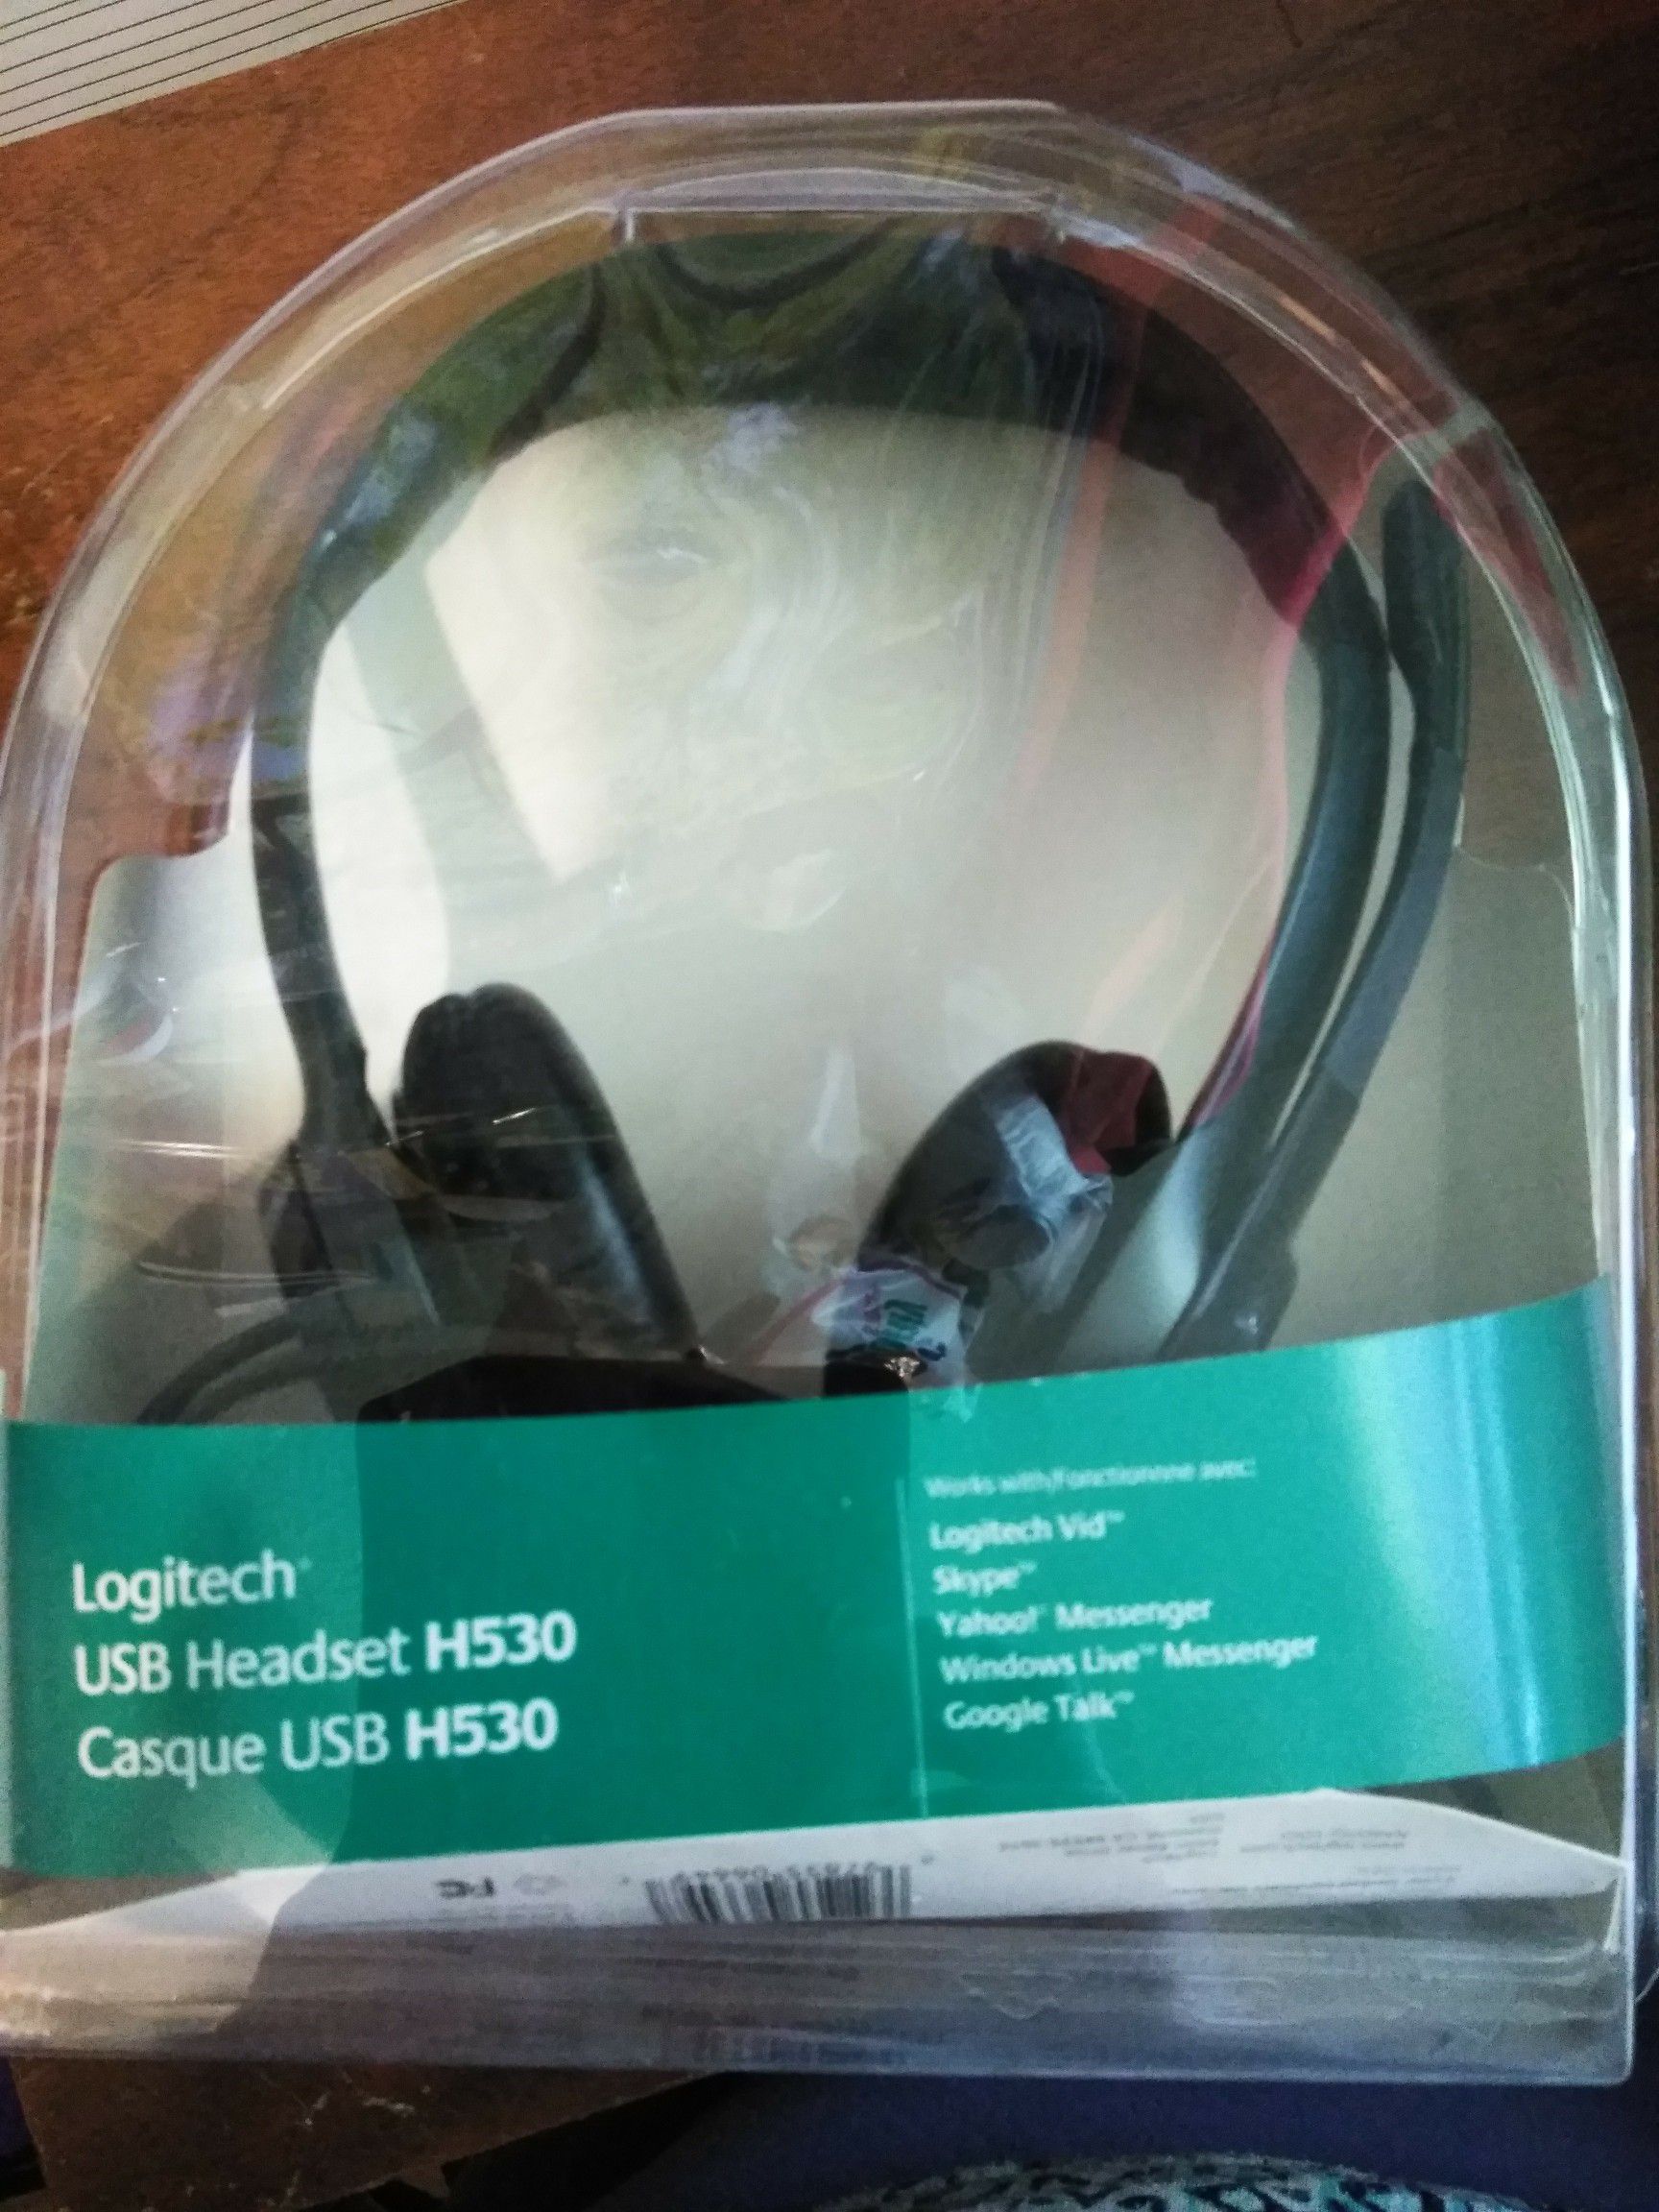 Logitech USB headset H530. New $40.